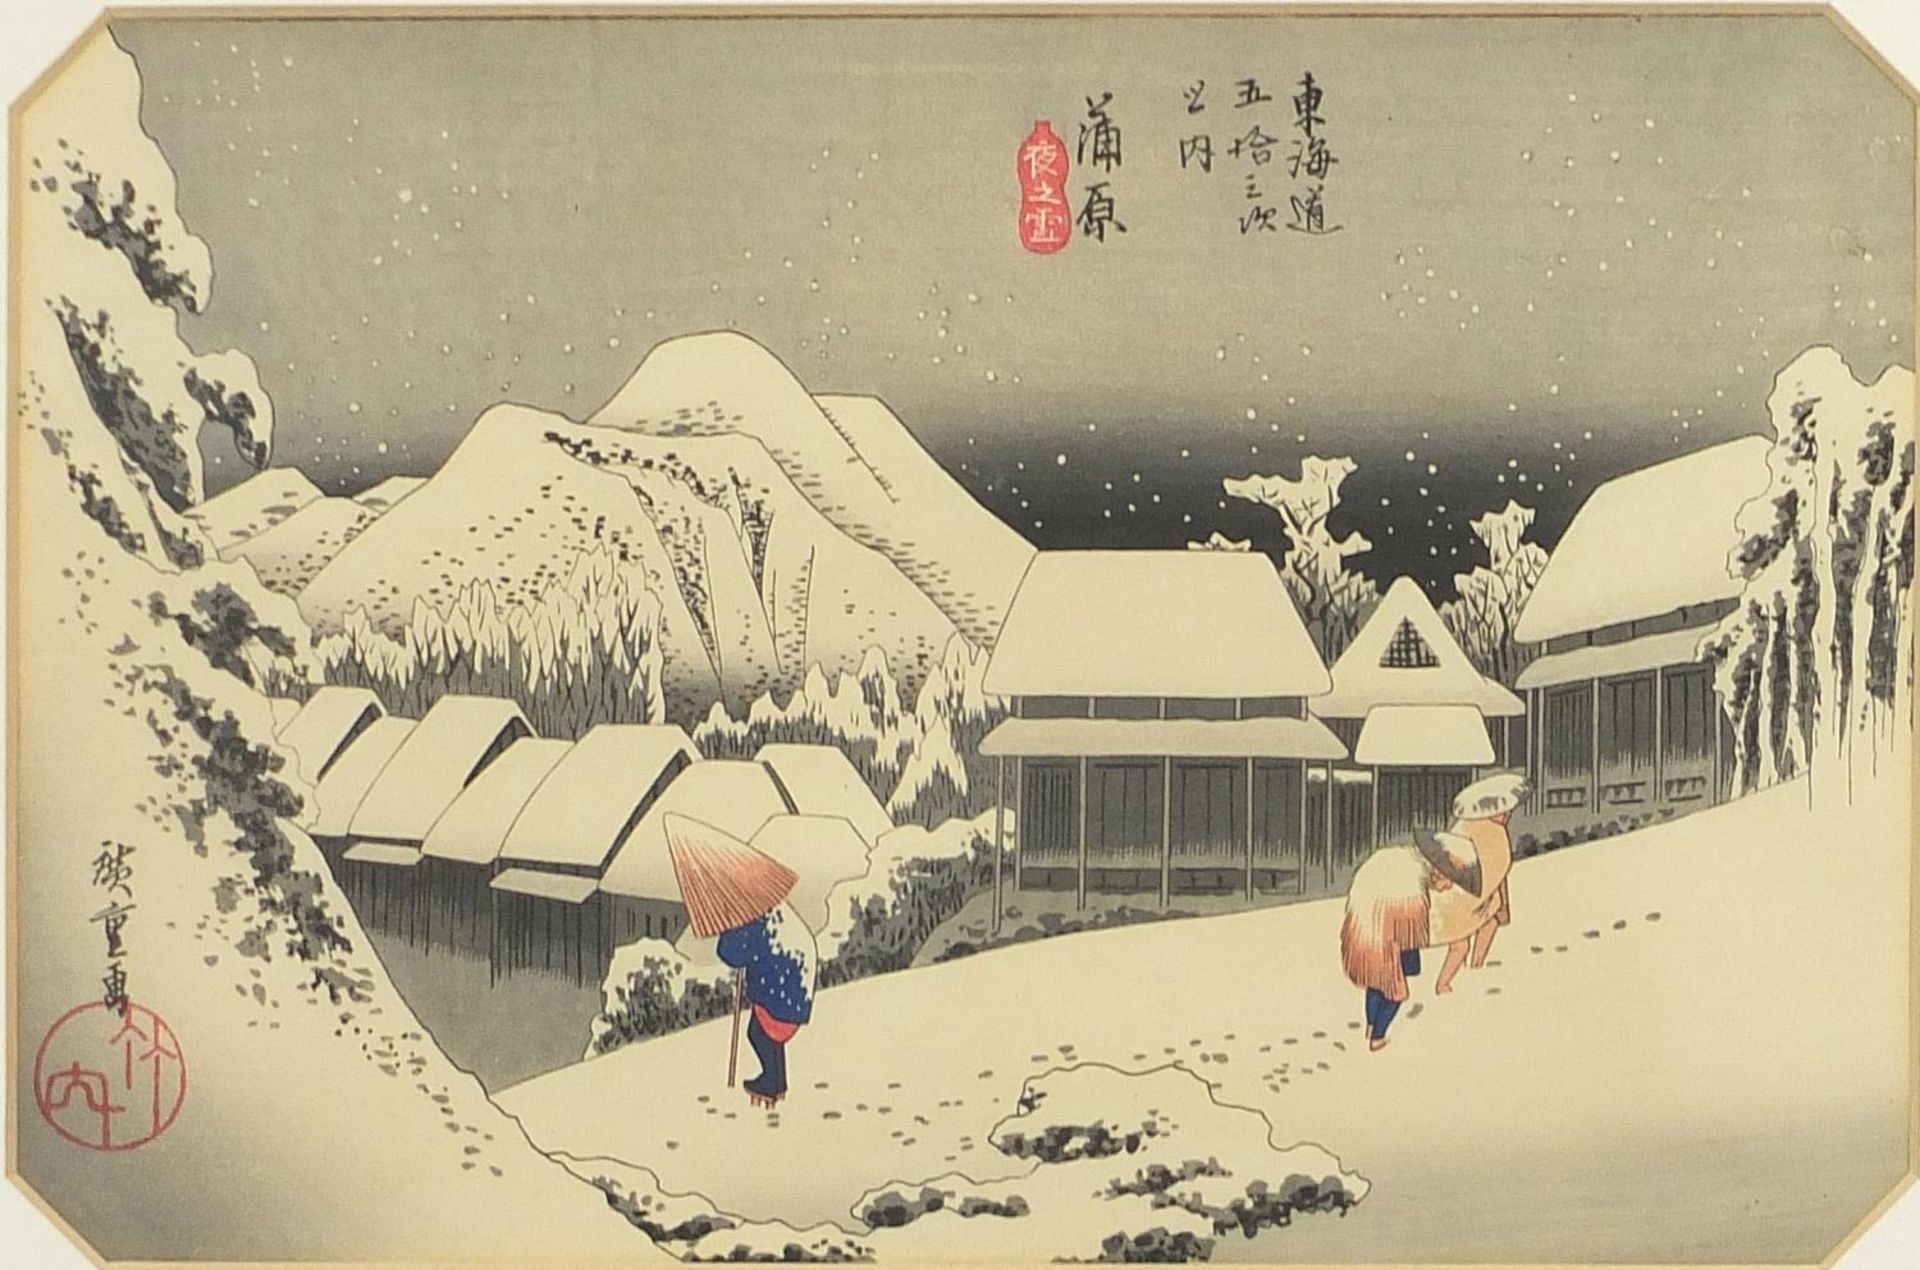 Hiroshige - Kanbara in snow, Japanese woodblock print, mounted, framed and glazed, 34.5cm x 22.5cm